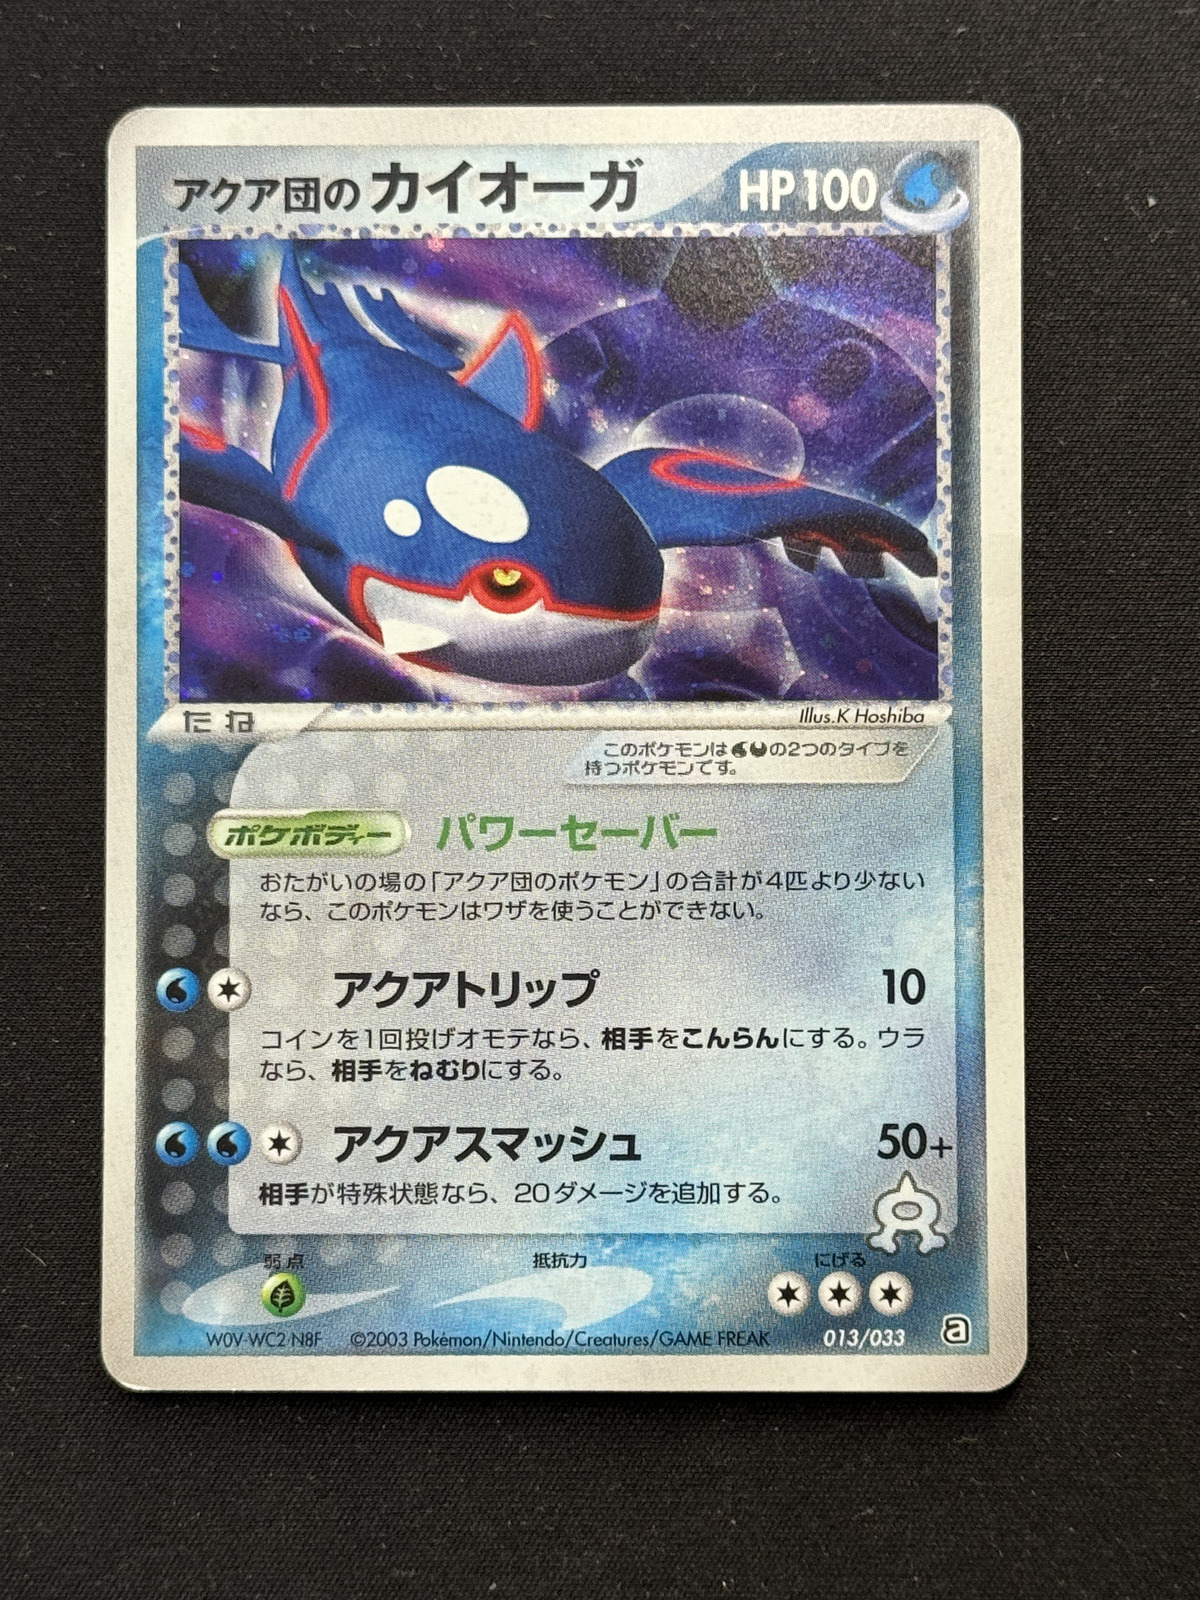 Team Aqua Kyogre - 013/033 - EXC - HOLO - Pokemon Japanese Card Japan